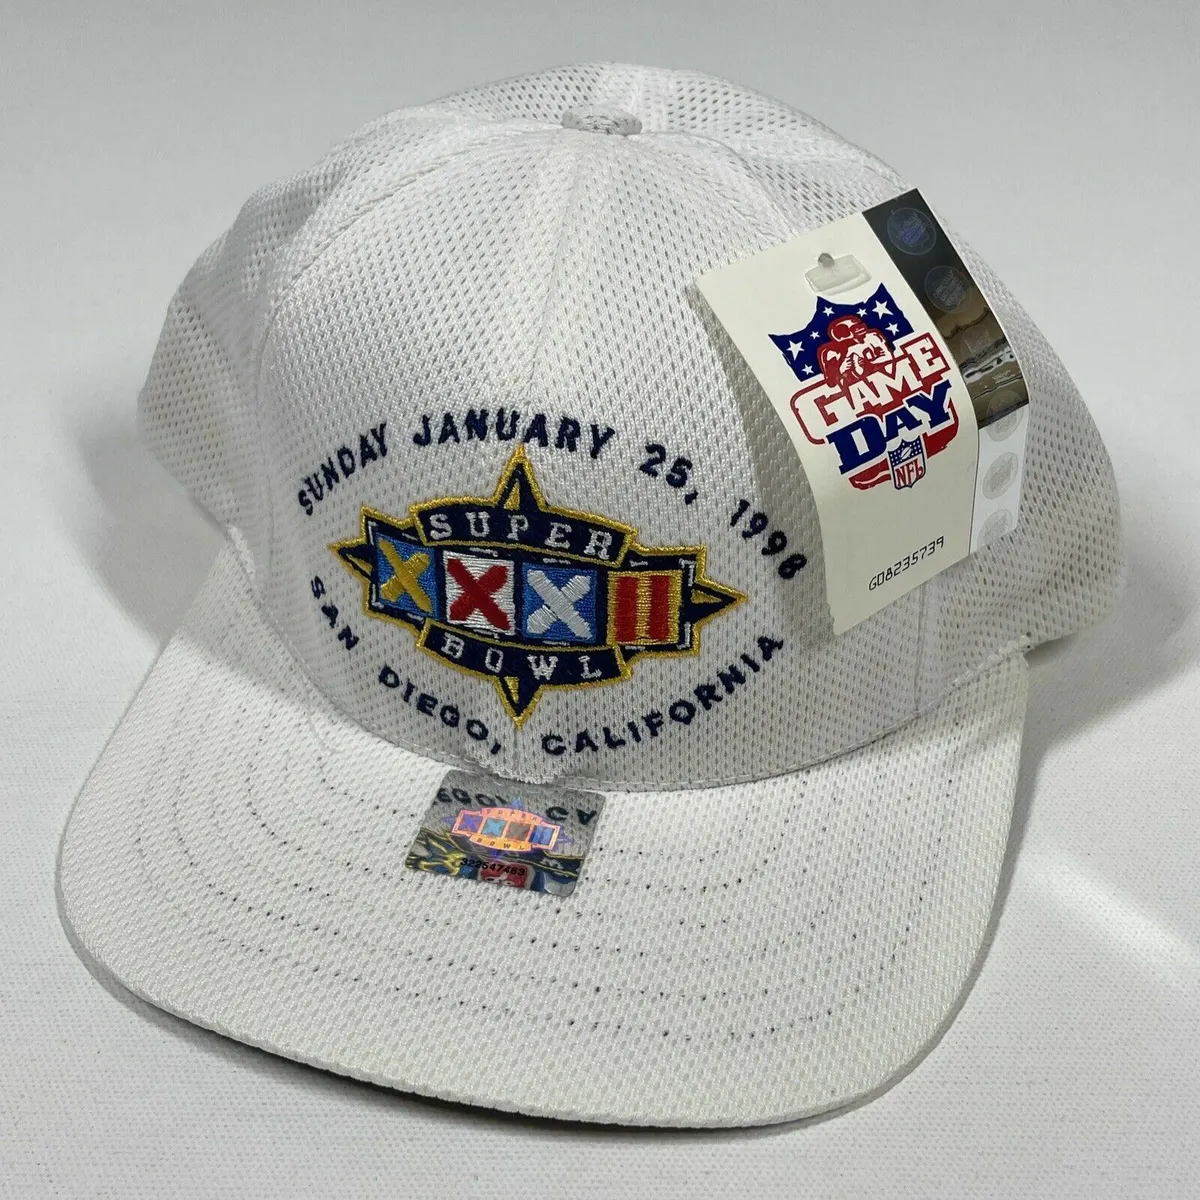 Super Bowl XXXII 1998 Snapback Hat San Diego Logo 7 White Vintage Football  Cap